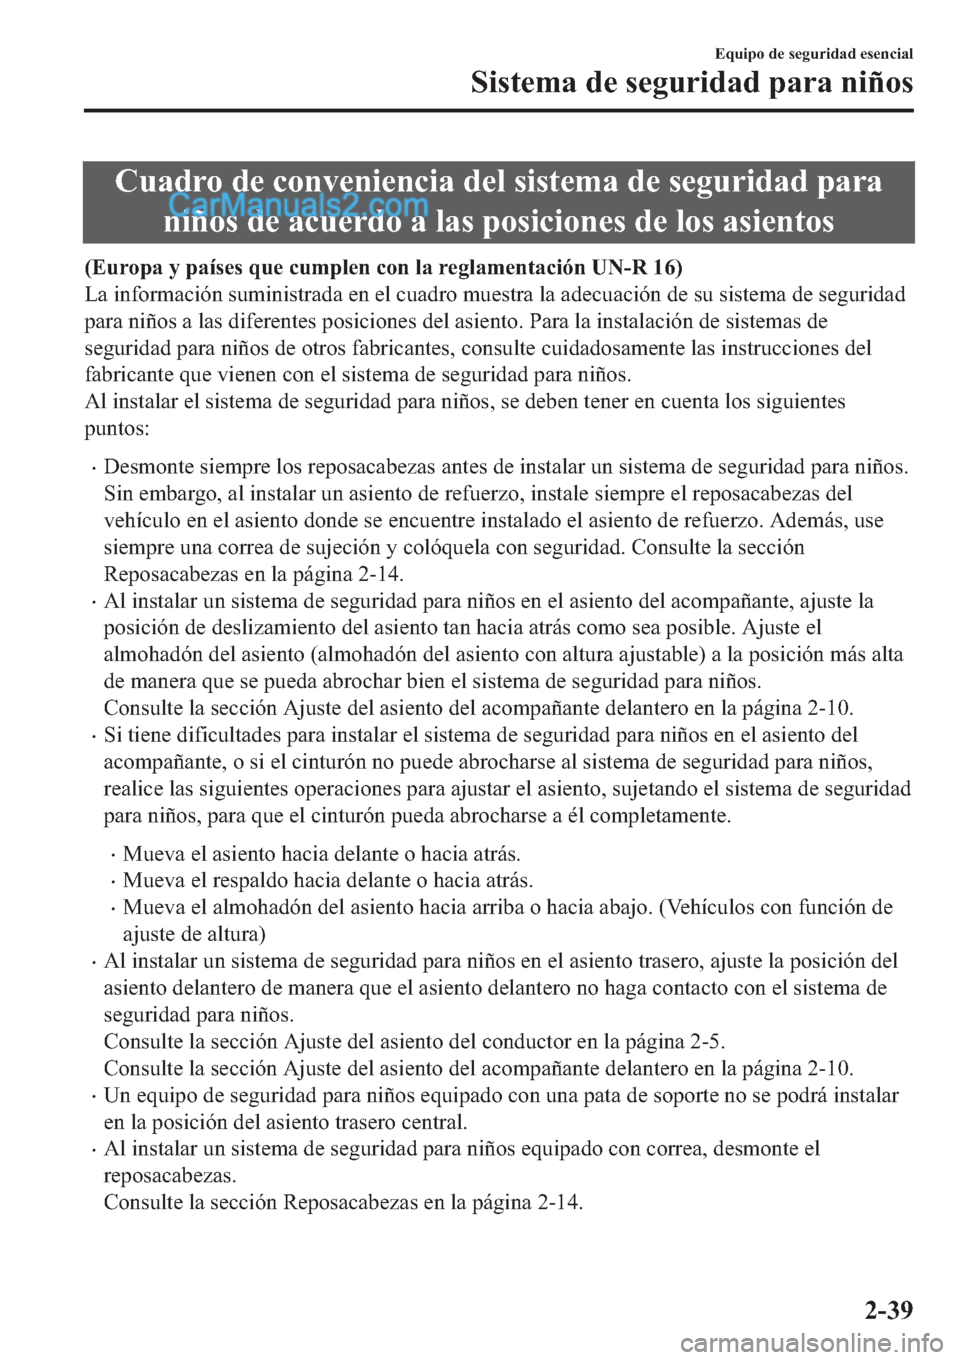 MAZDA MODEL 2 2019  Manual del propietario (in Spanish) �&�X�D�G�U�R��G�H��F�R�Q�Y�H�Q�L�H�Q�F�L�D��G�H�O��V�L�V�W�H�P�D��G�H��V�H�J�X�U�L�G�D�G��S�D�U�D
�Q�L�x�R�V��G�H��D�F�X�H�U�G�R��D��O�D�V��S�R�V�L�F�L�R�Q�H�V��G�H��O�R�V��D�V�L�H�Q�W�